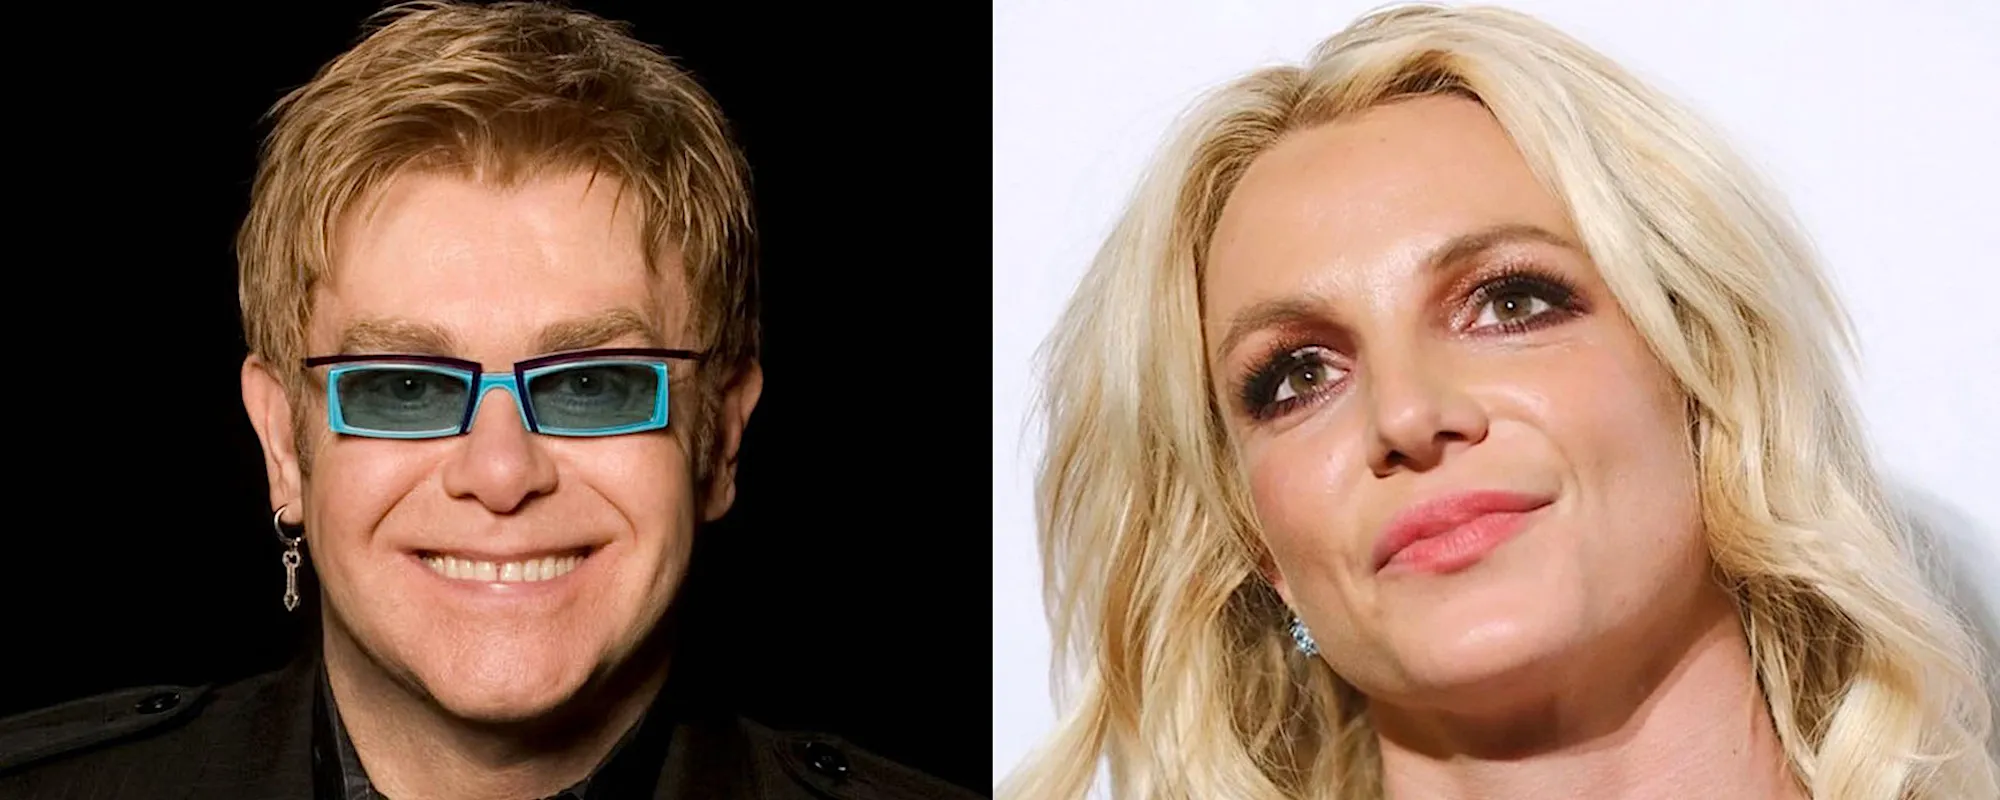 Elton John, Britney Spears Reimagine “Tiny Dancer” with “Hold Me Closer”